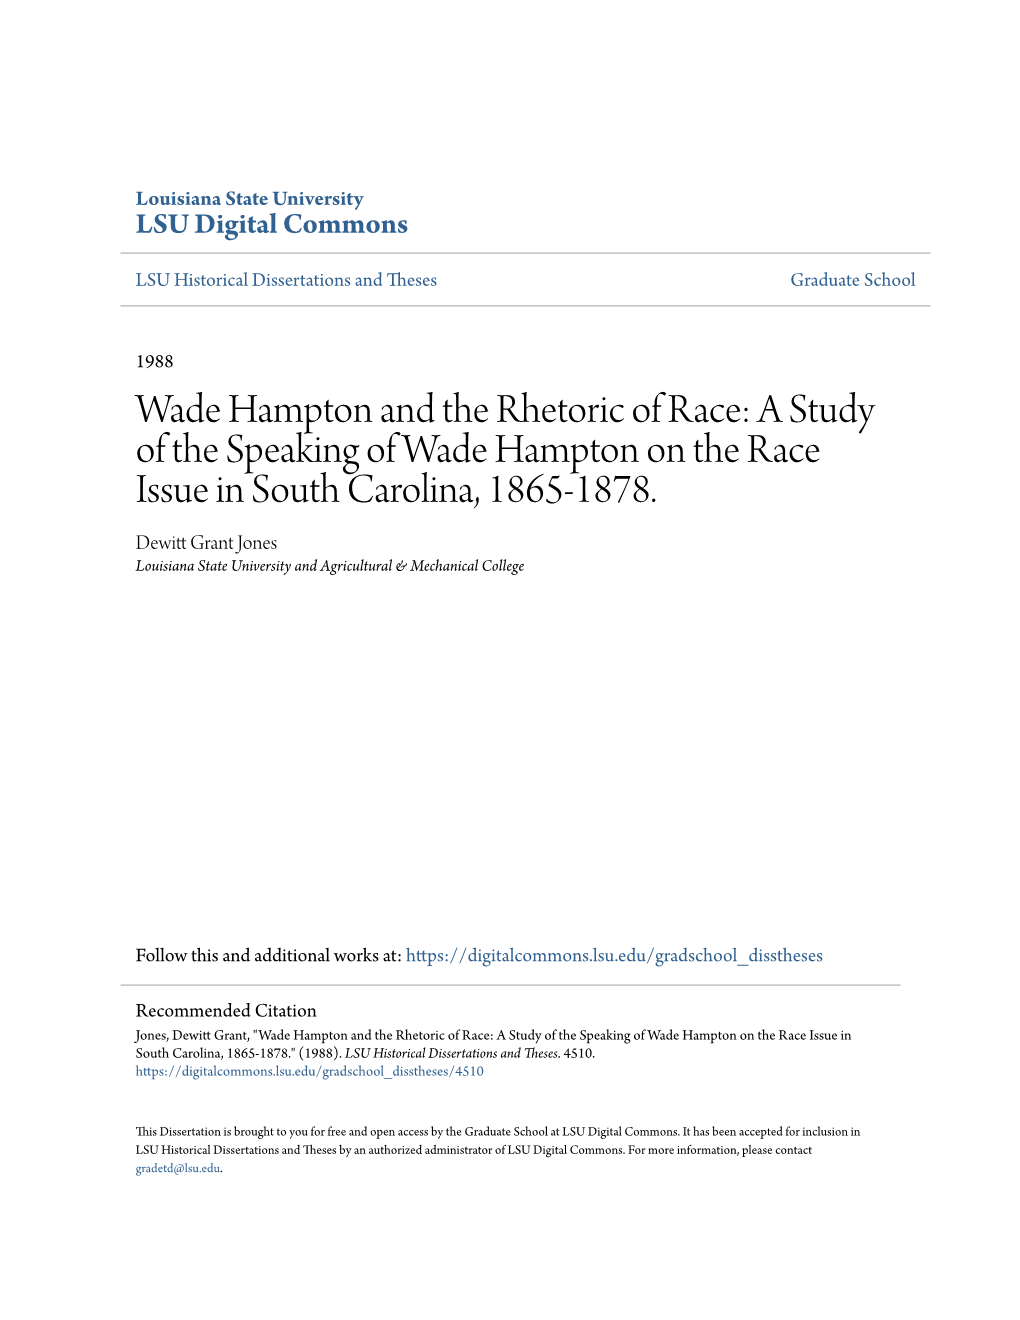 Wade Hampton and the Rhetoric of Race: a Study of the Speaking of Wade Hampton on the Race Issue in South Carolina, 1865-1878